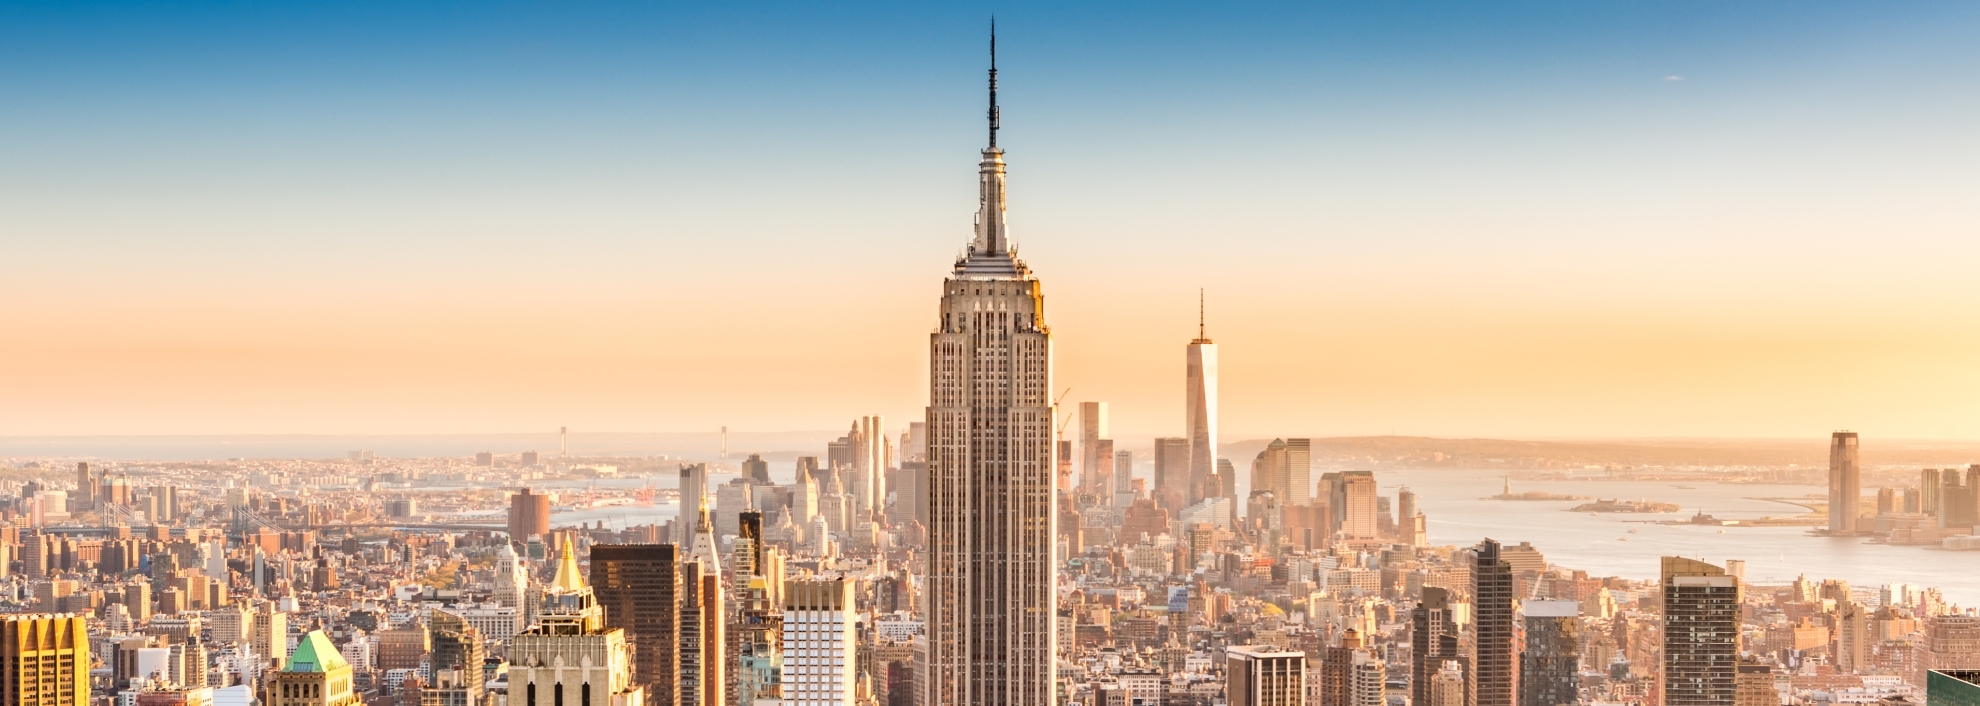 daytime view of the New York City skyline